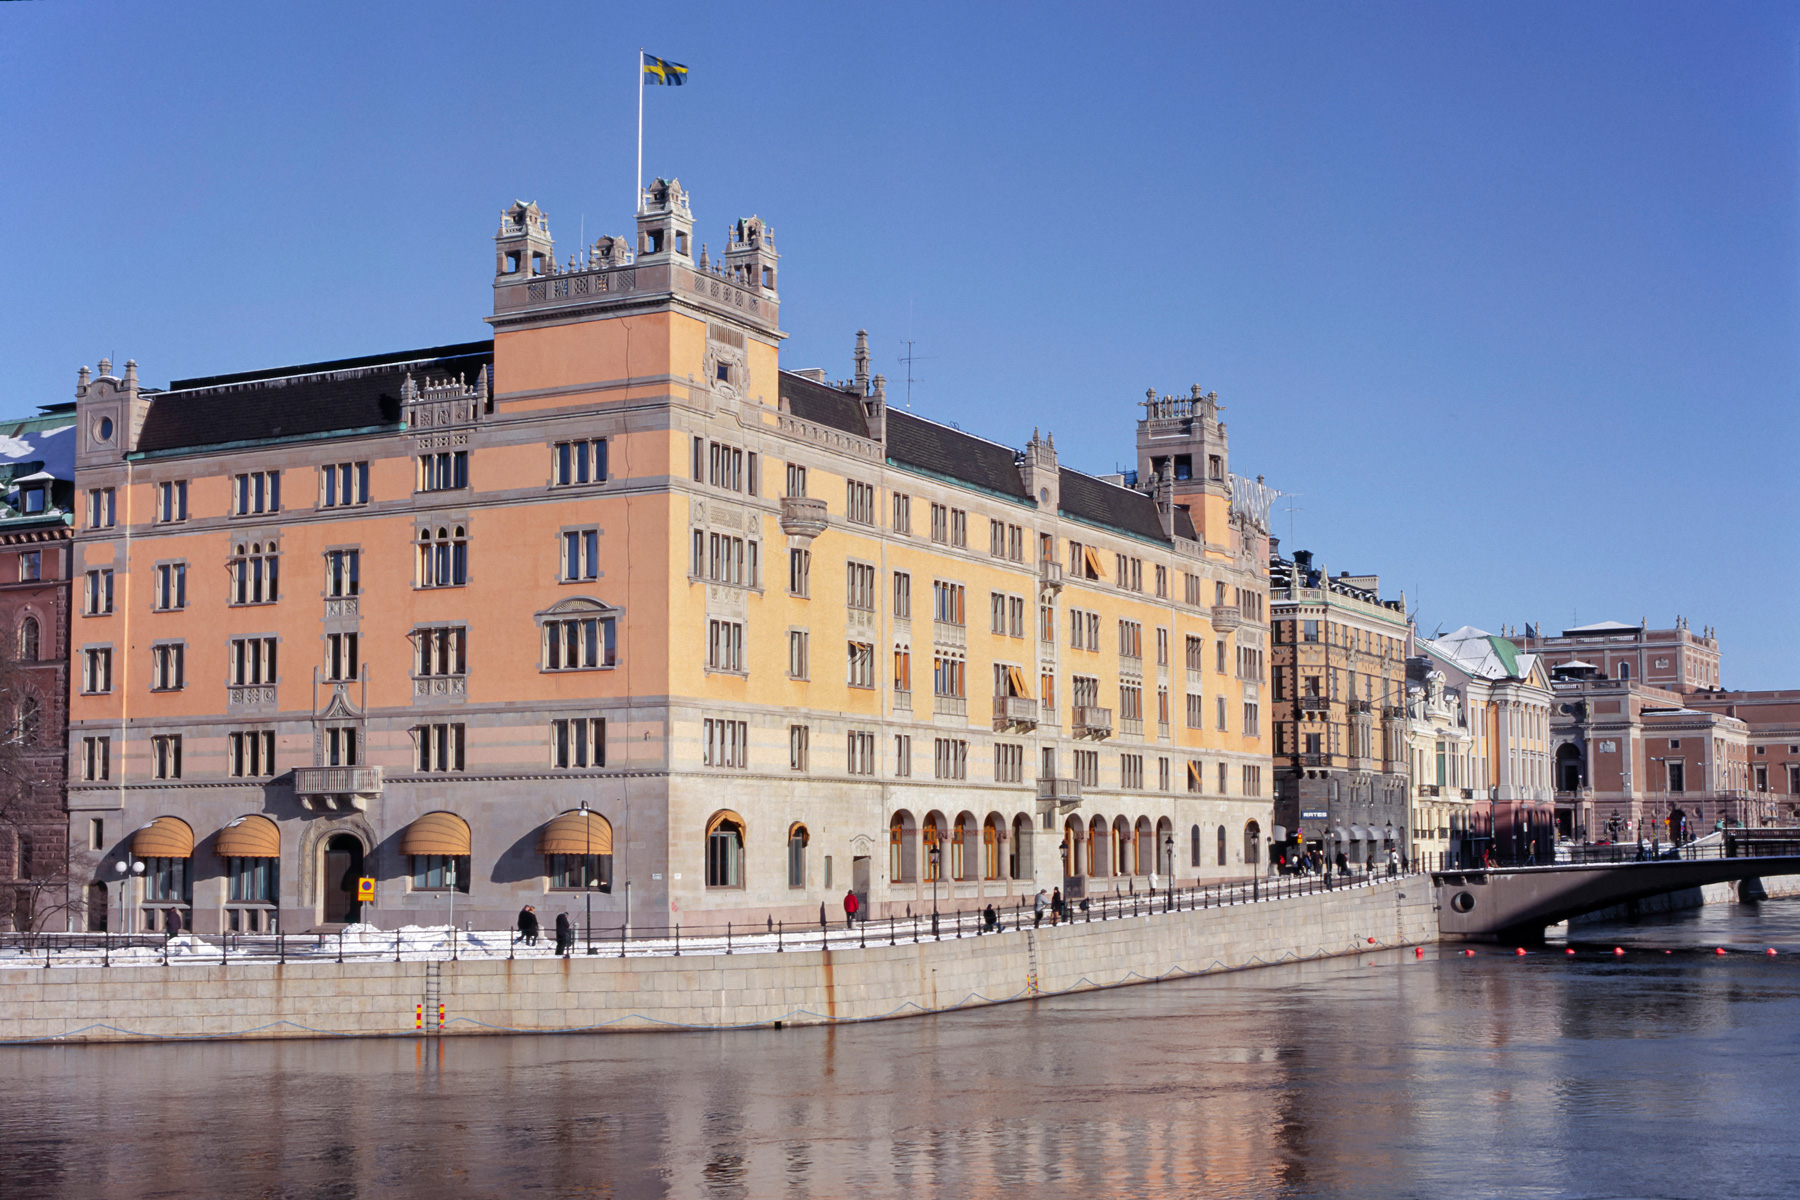 Sverige börjar öppnas steg för steg 1 juni